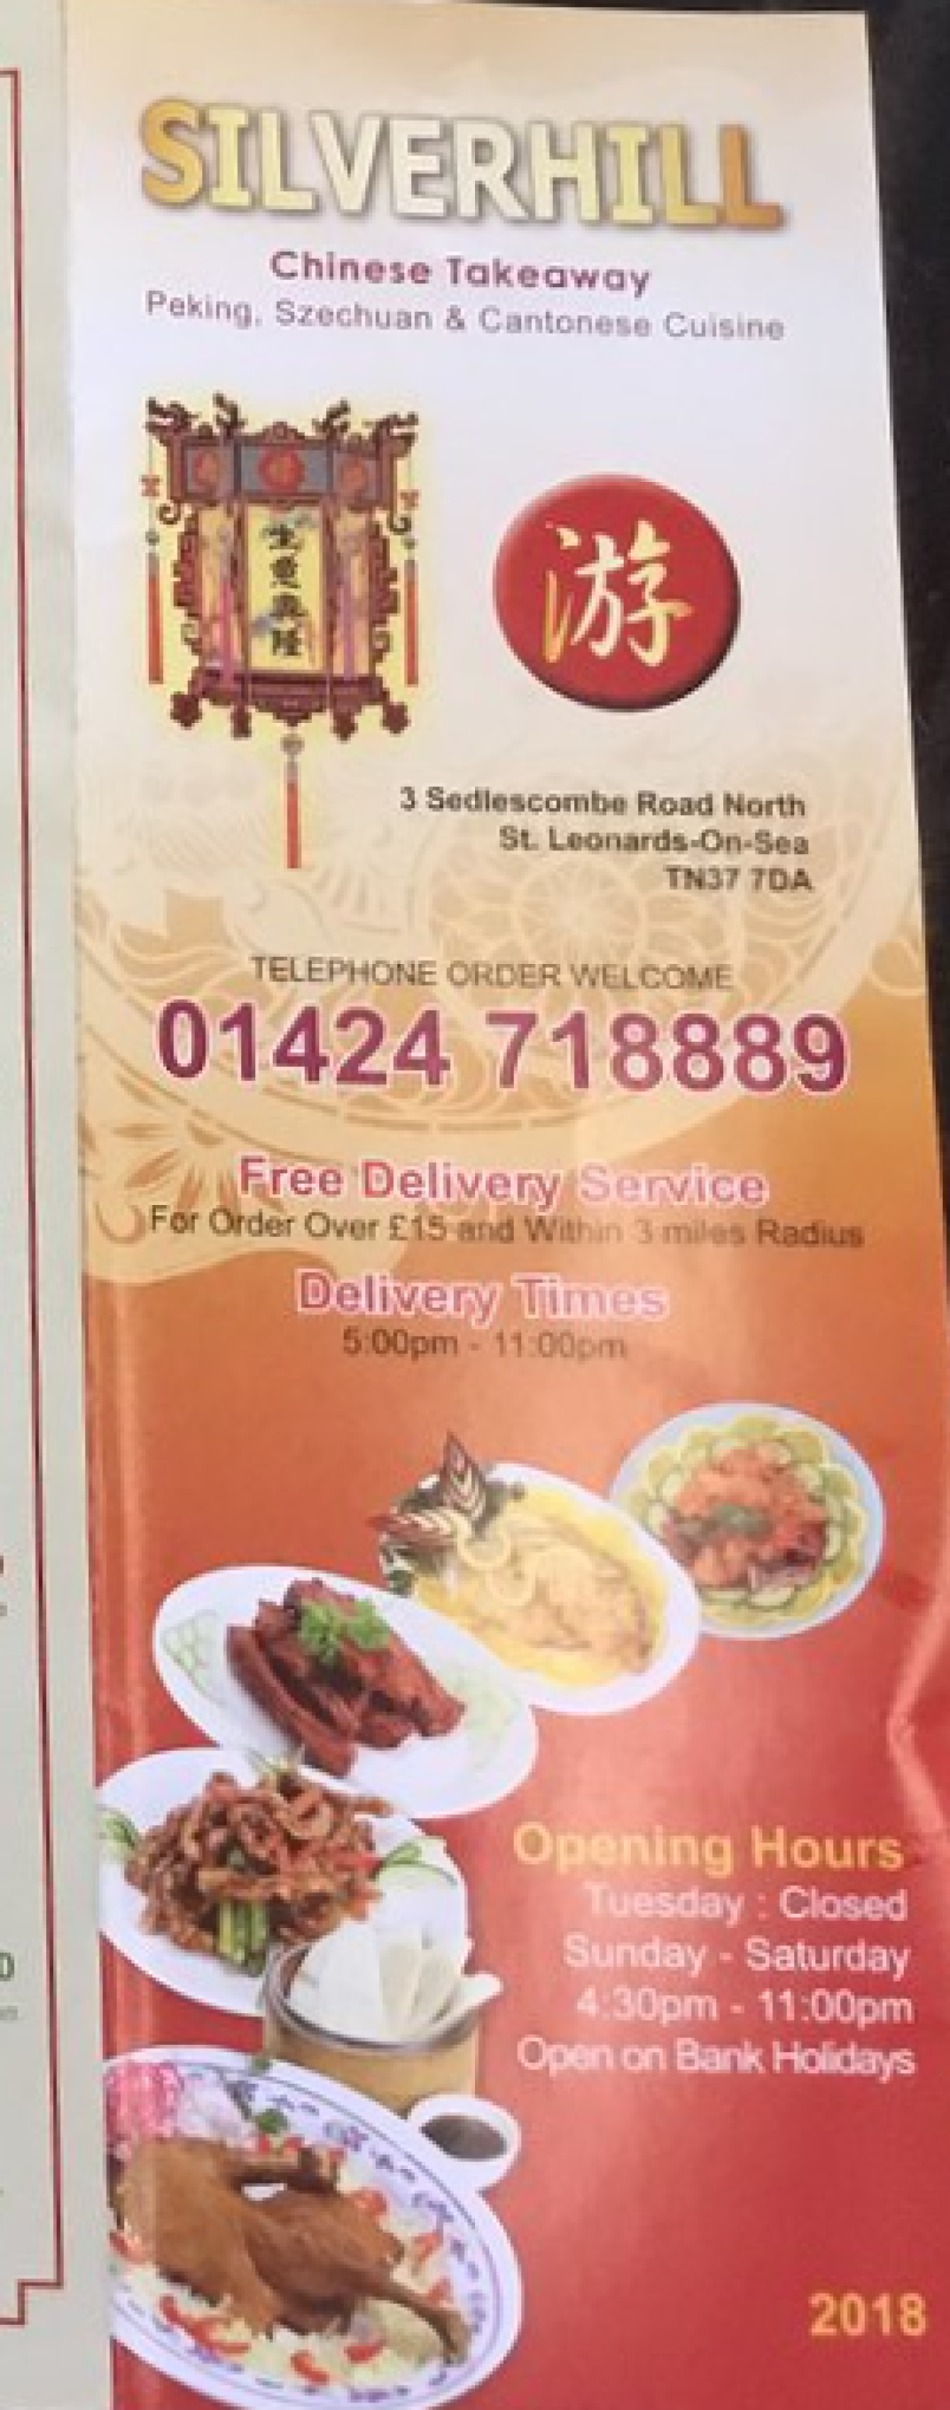 Takeaway Restaurant Menu Page - Silverhill Chinese Takeaway - Saint Leonards-on-sea